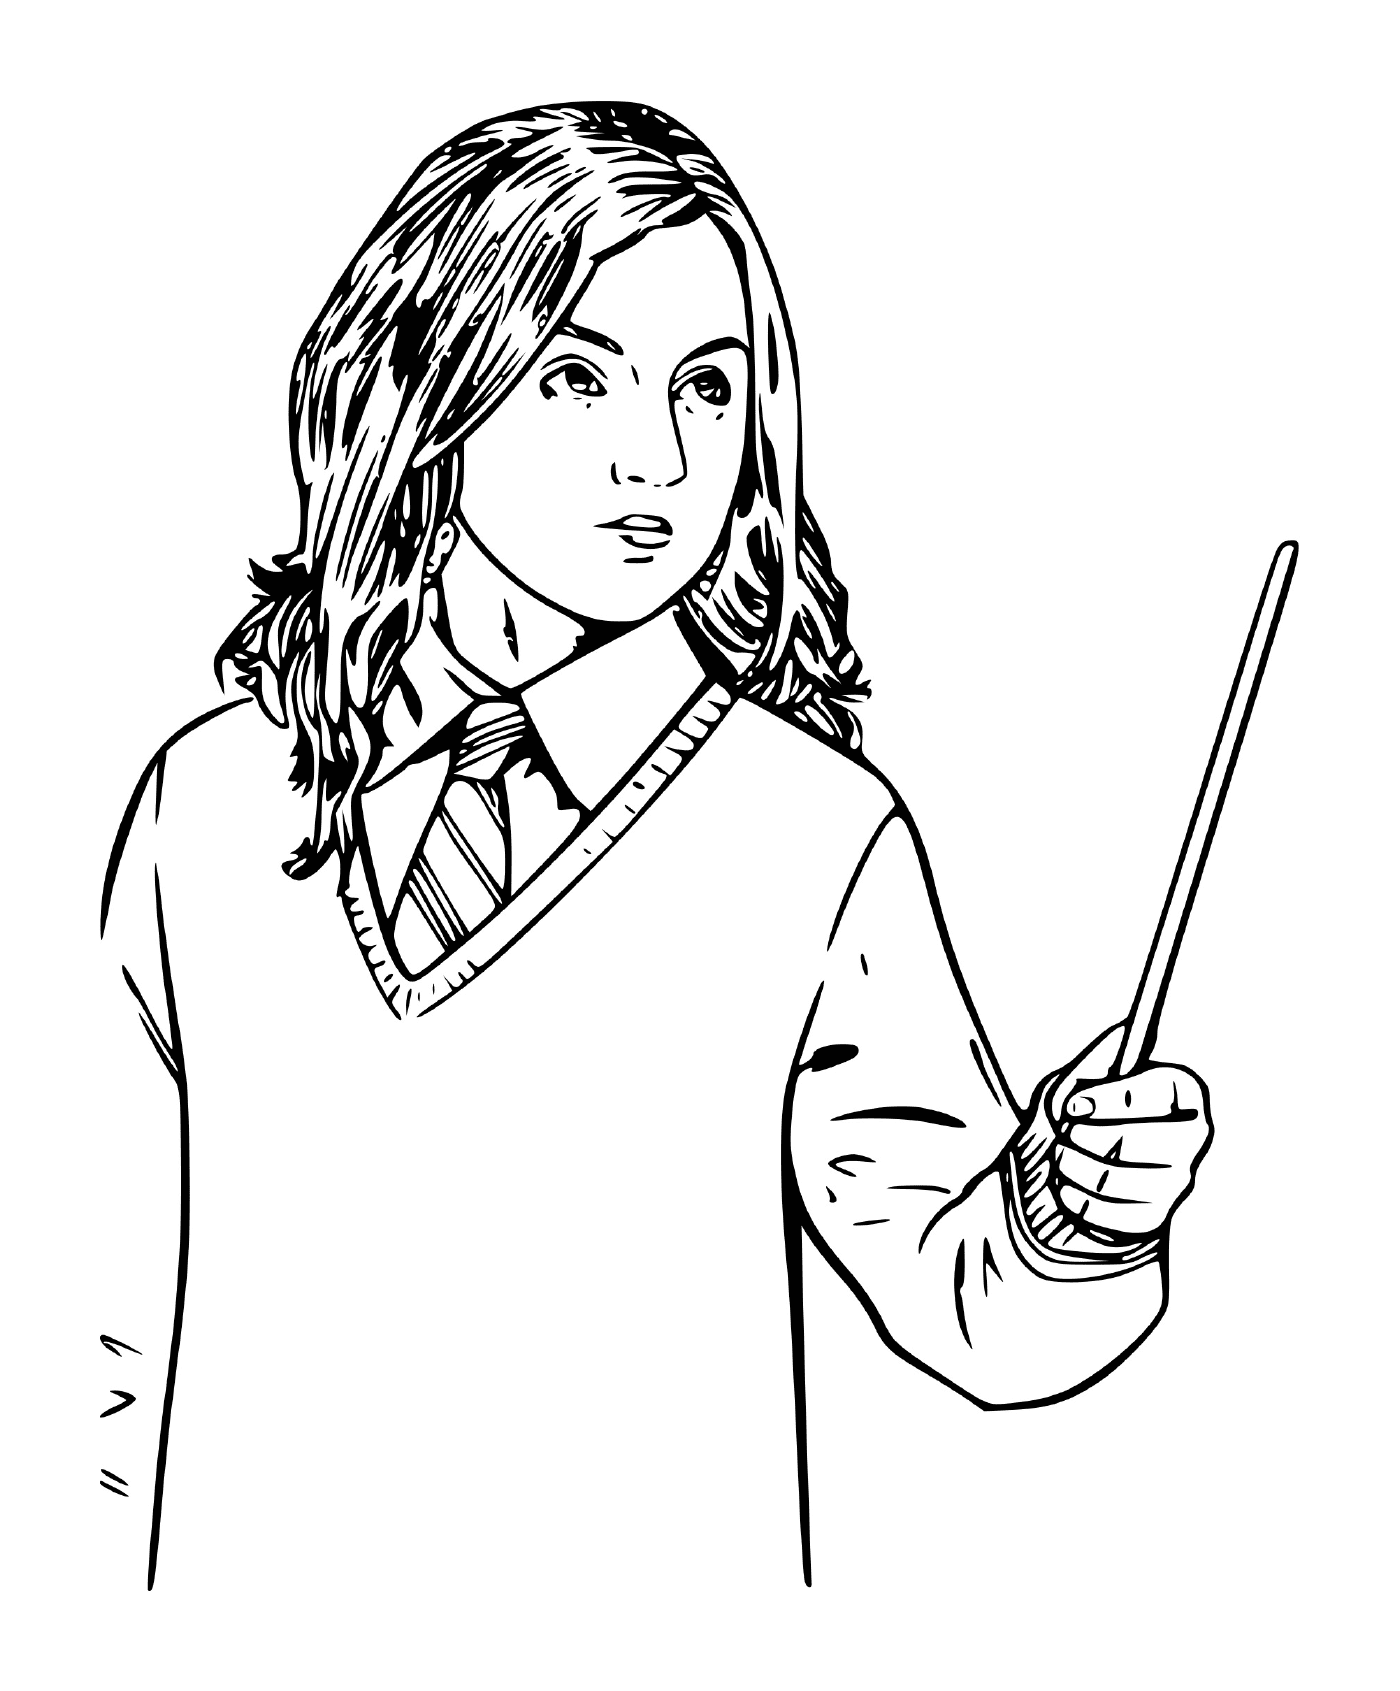  Hermione Granger, lontra patrono 